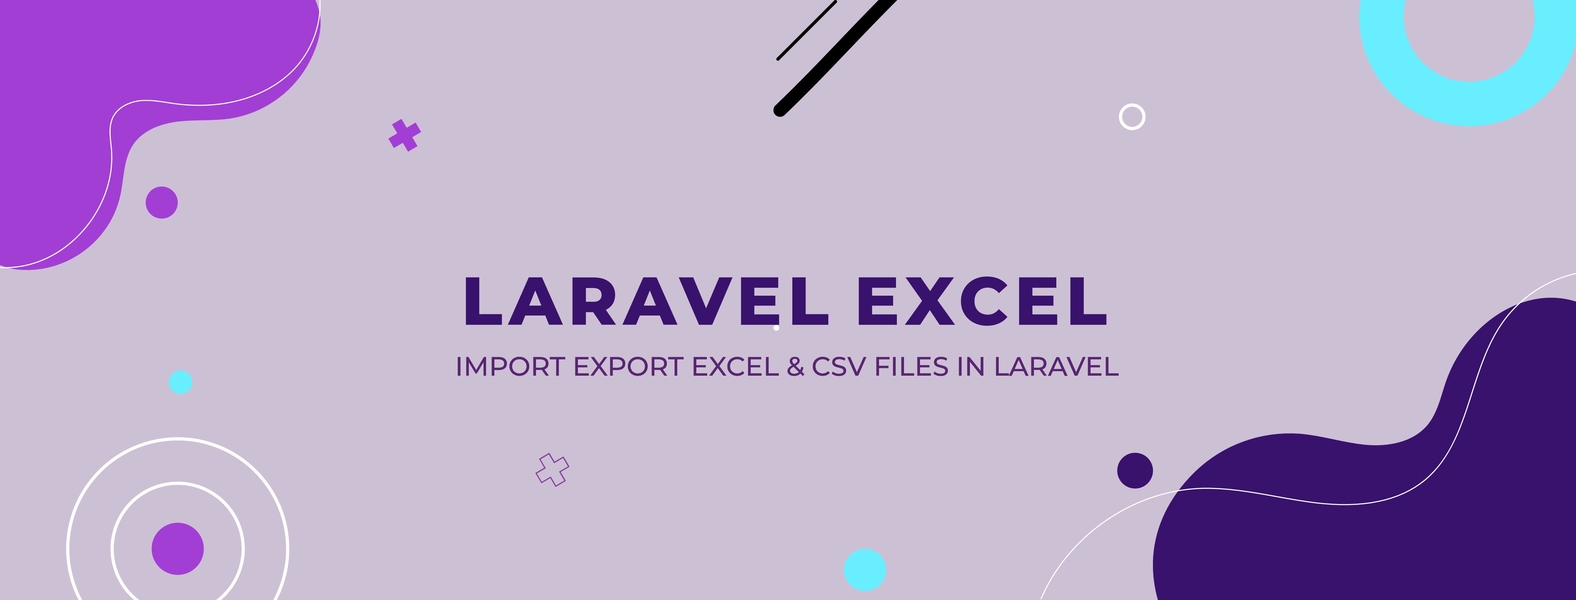 Laravel Excel - Import Export Excel & CSV files in Laravel